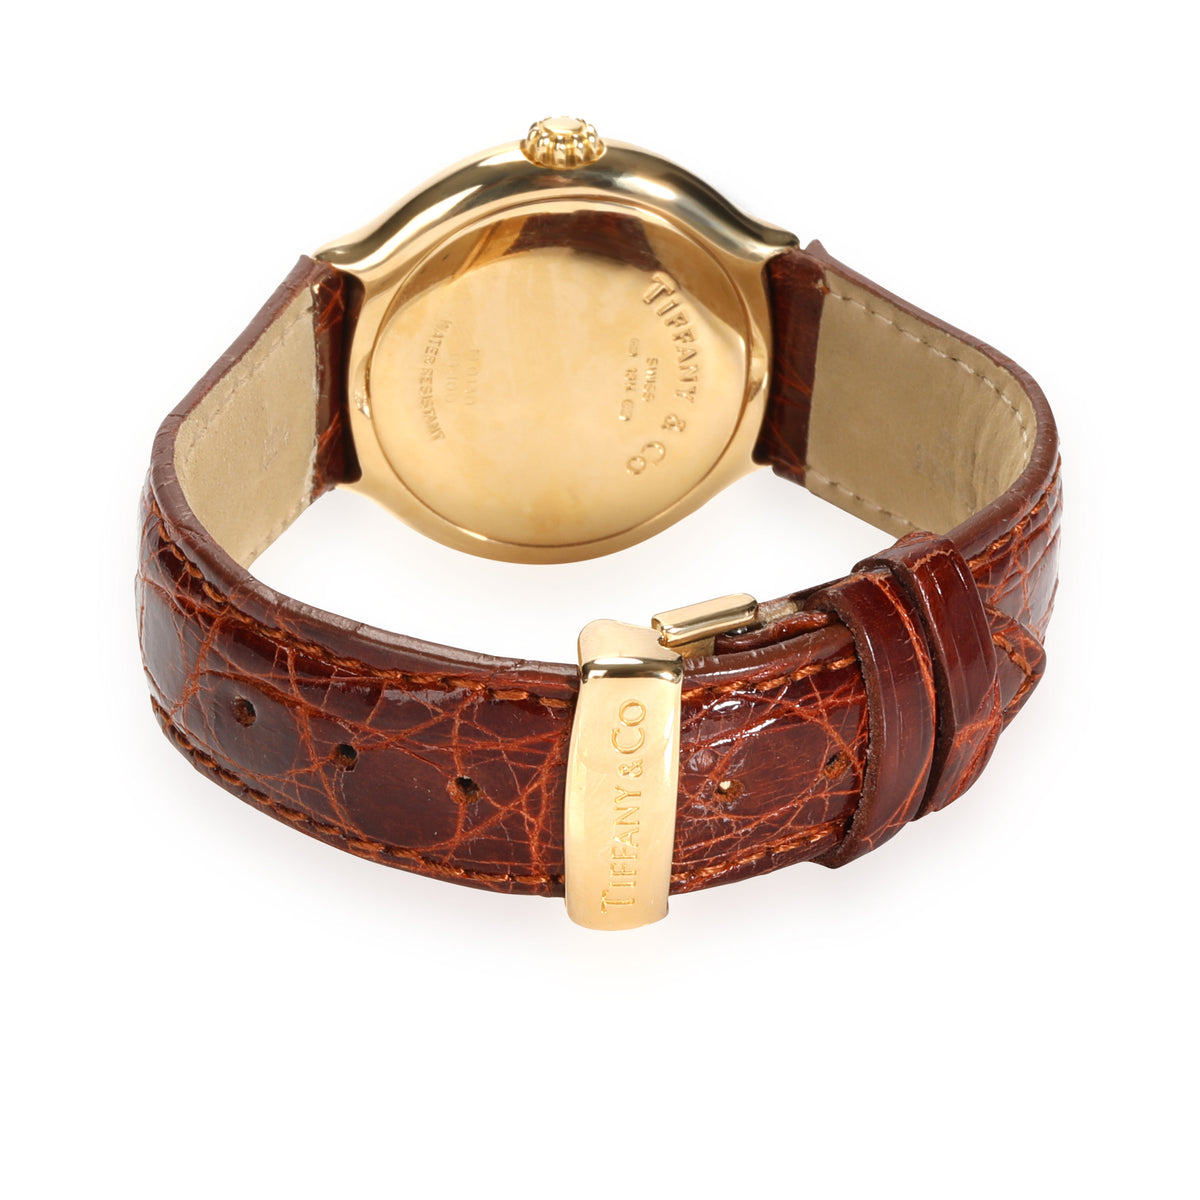 Tiffany & Co. Tesoro M0130 Unisex Watch in 18kt Yellow Gold